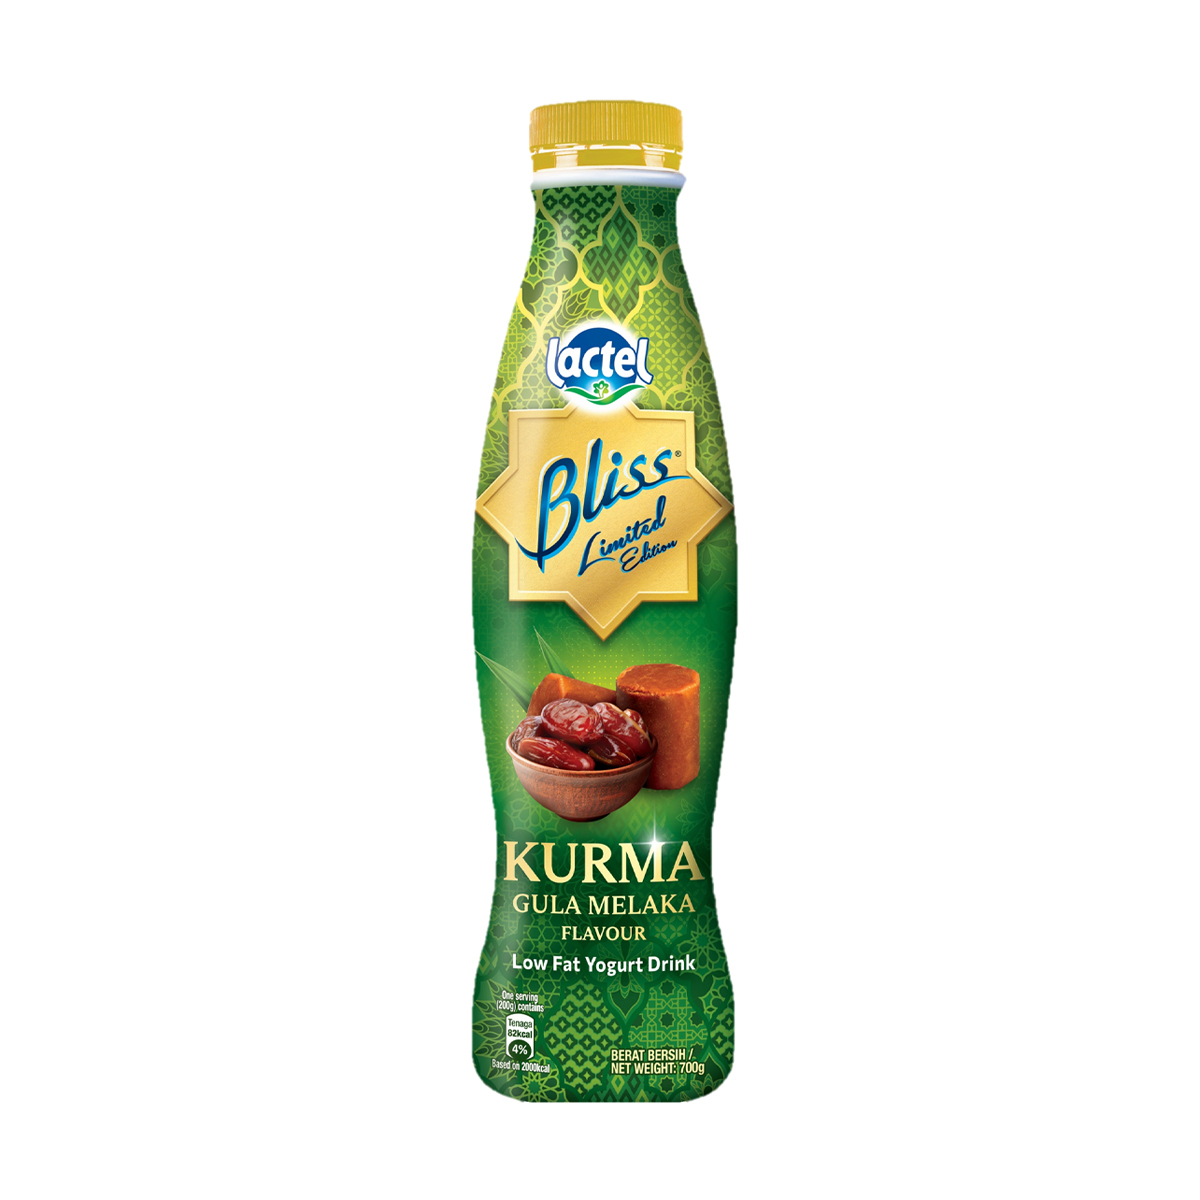 Nestle Lactel Bliss Low Fat Yogurt Drink Kurma Gula Melaka 700g